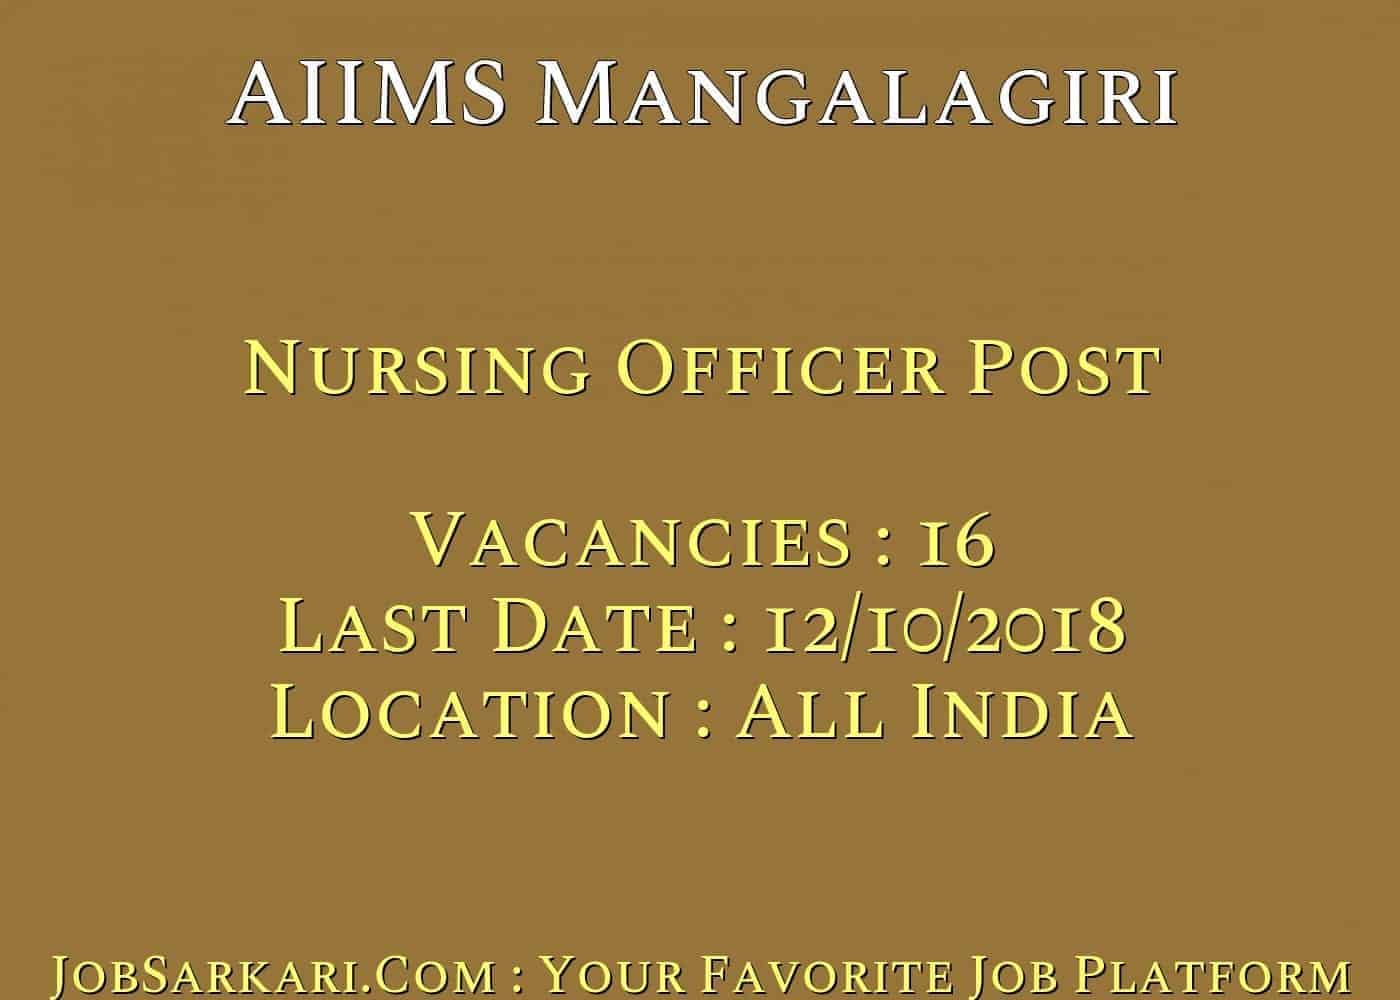 AIIMS Mangalagiri Recruitment 2018 for Nursing Officer Post